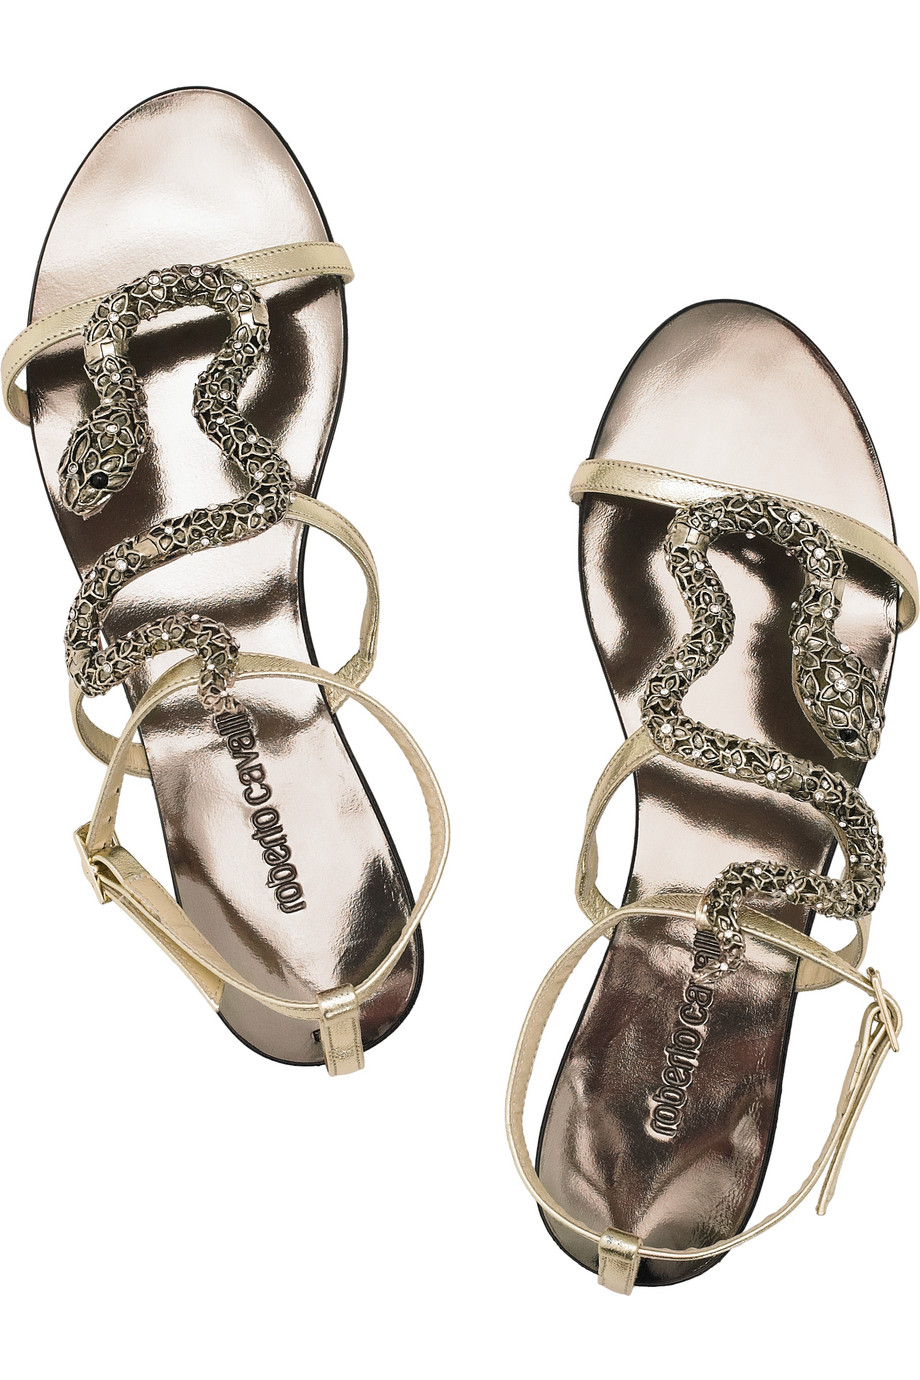 Roberto Cavalli Swarovski Crystal Snake and Leather Sandals in Gold ...